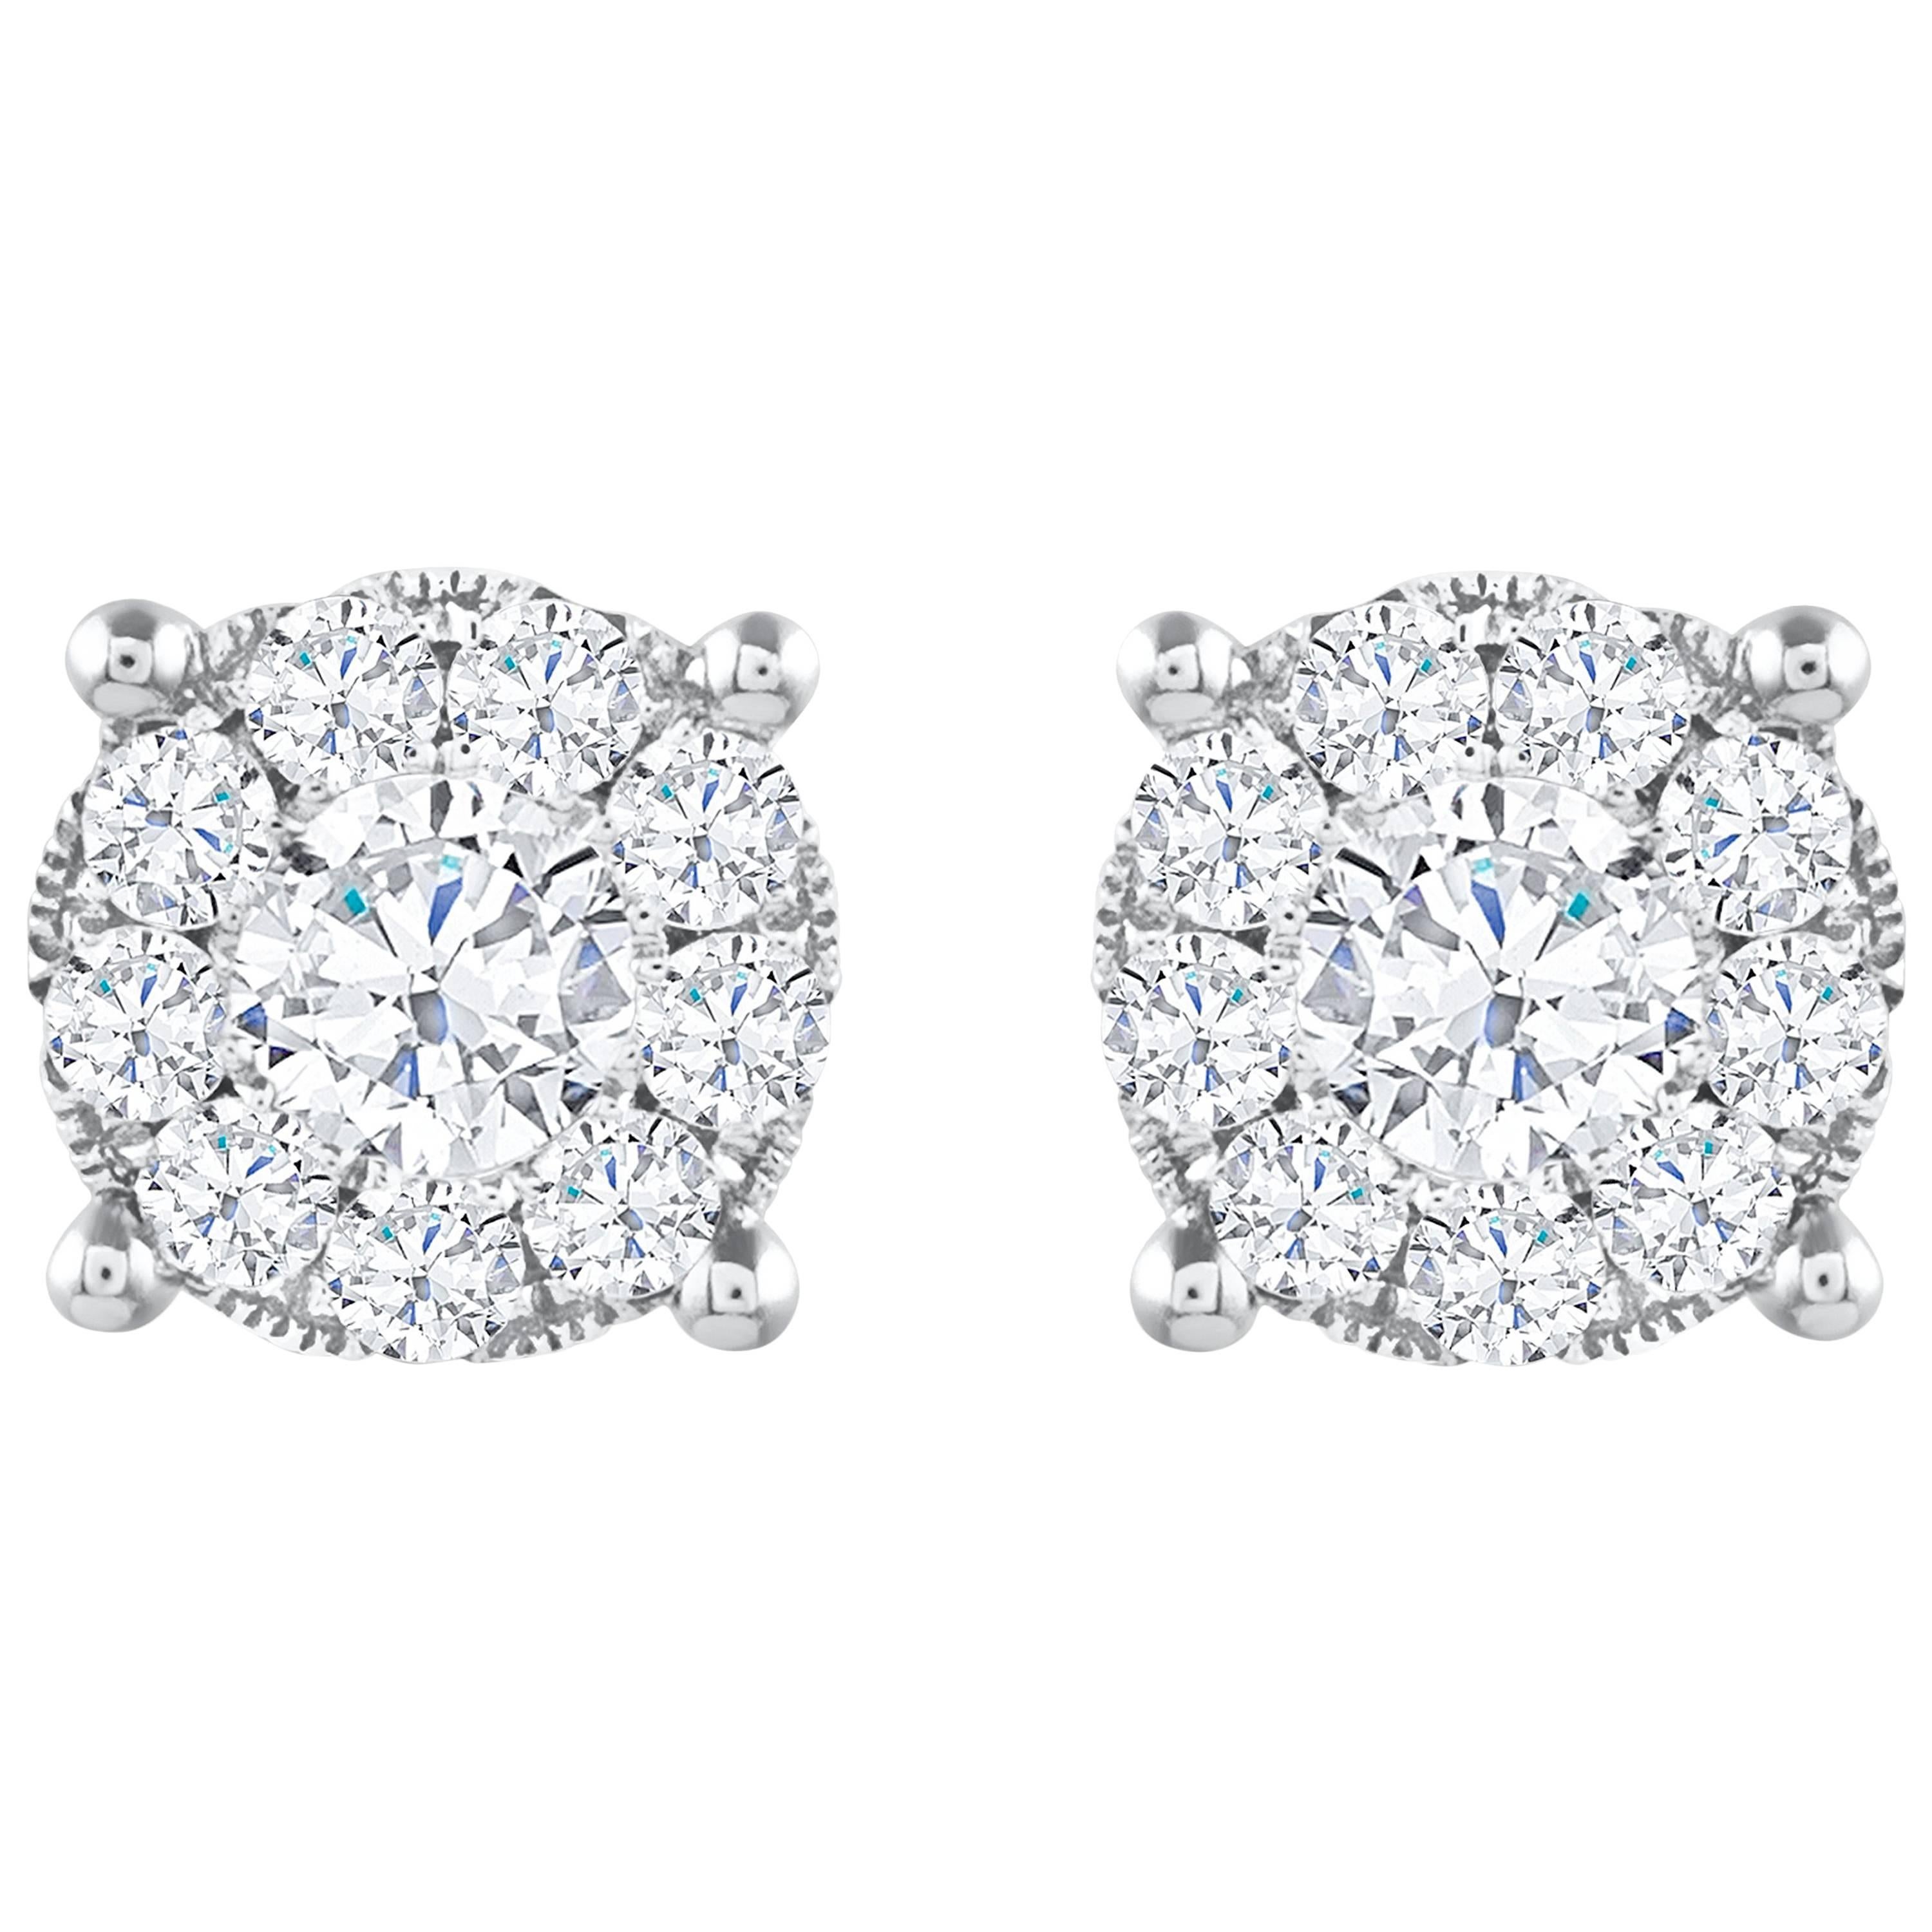 Roman Malakov, 1.29 Carat Total Diamond Cluster Stud Earrings